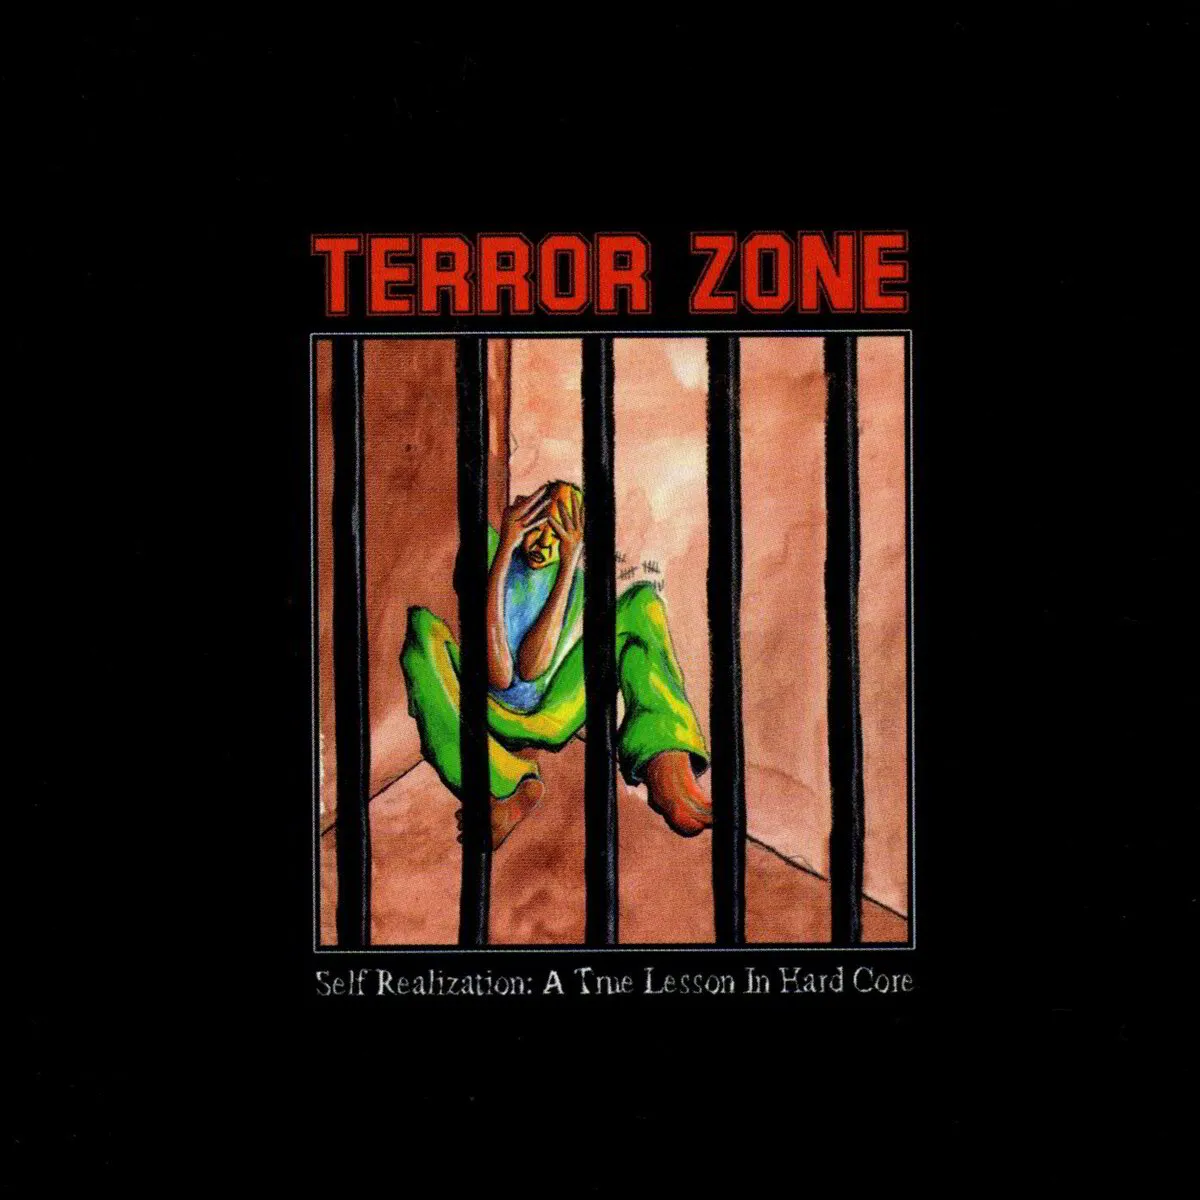 Self-Realization: A True Lesson in Hardcore by Terror Zone [Re-release]